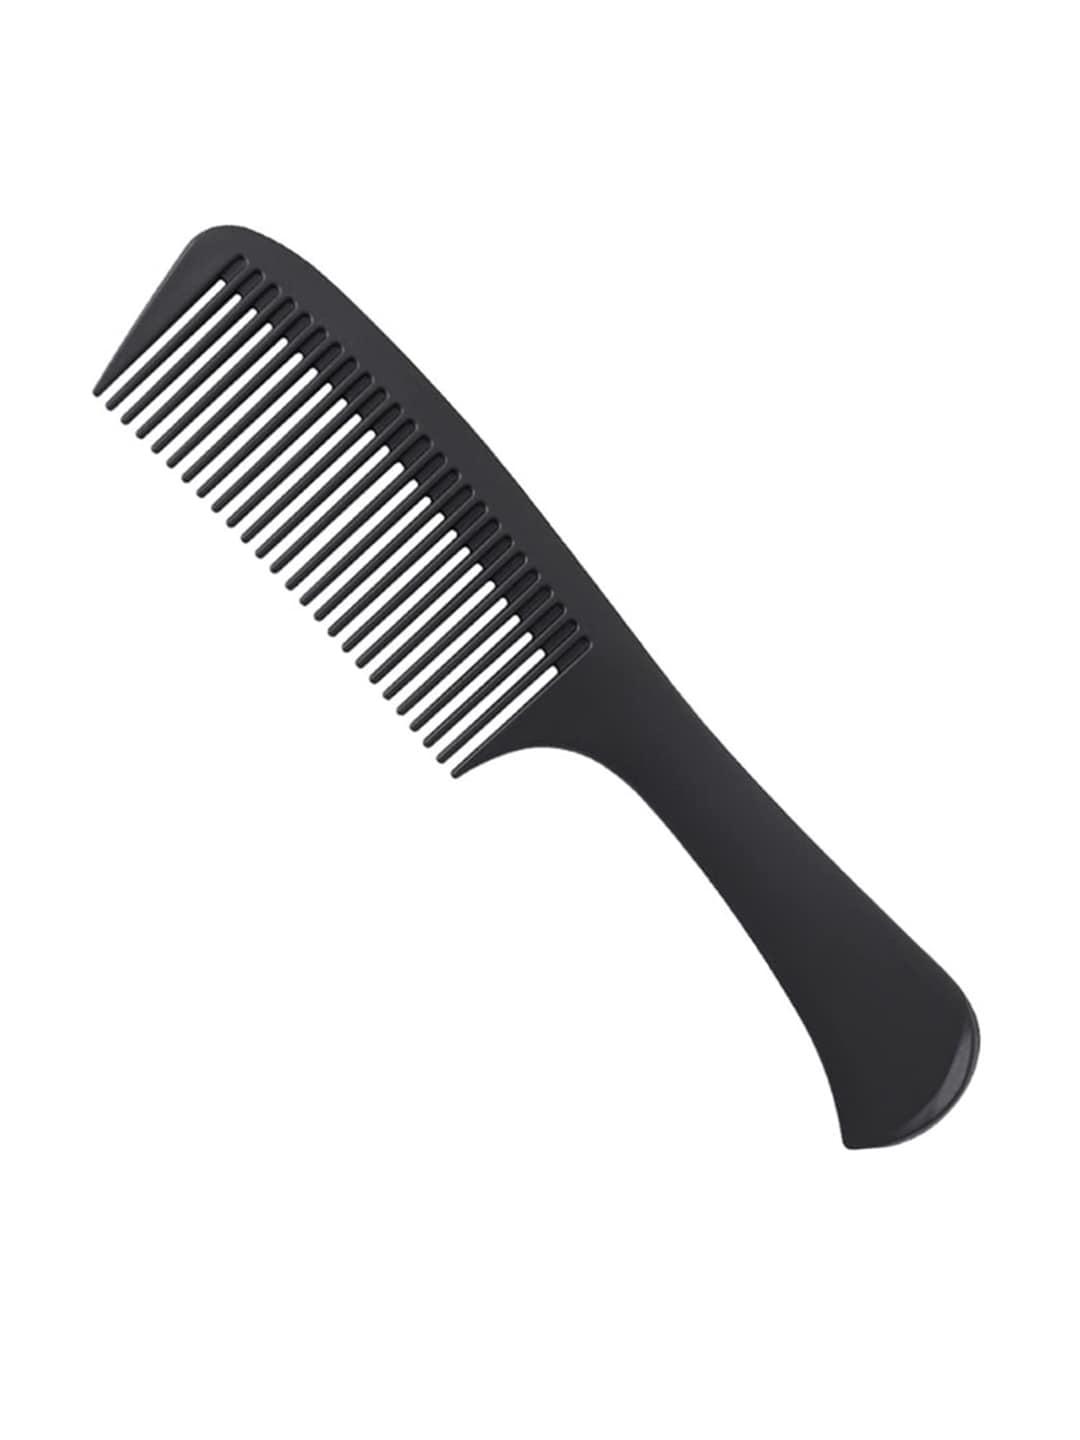 feelhigh professional black detangling wide tooth regular comb with handle